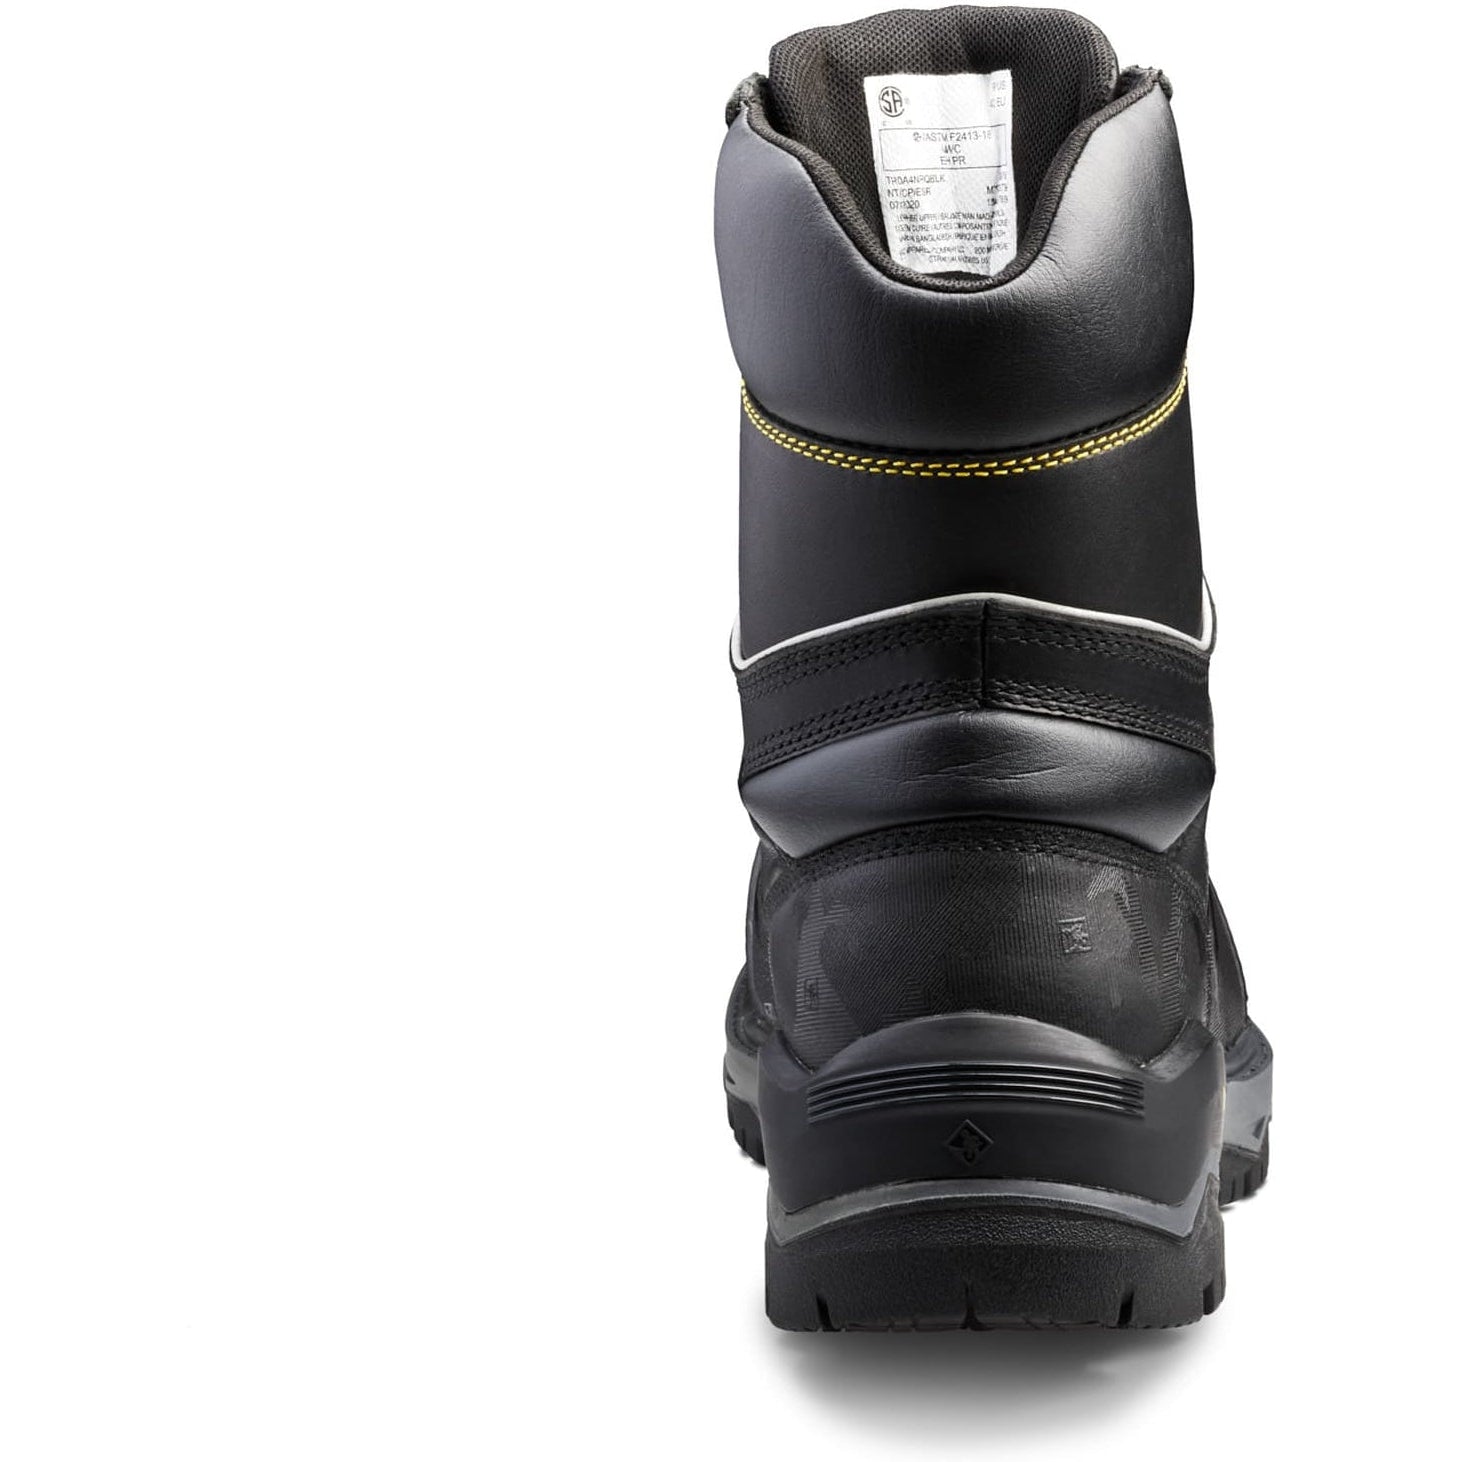 Terra Men's Gantry 8" Comp Toe WP Safety Work Boot -Black- 4NRQBK  - Overlook Boots